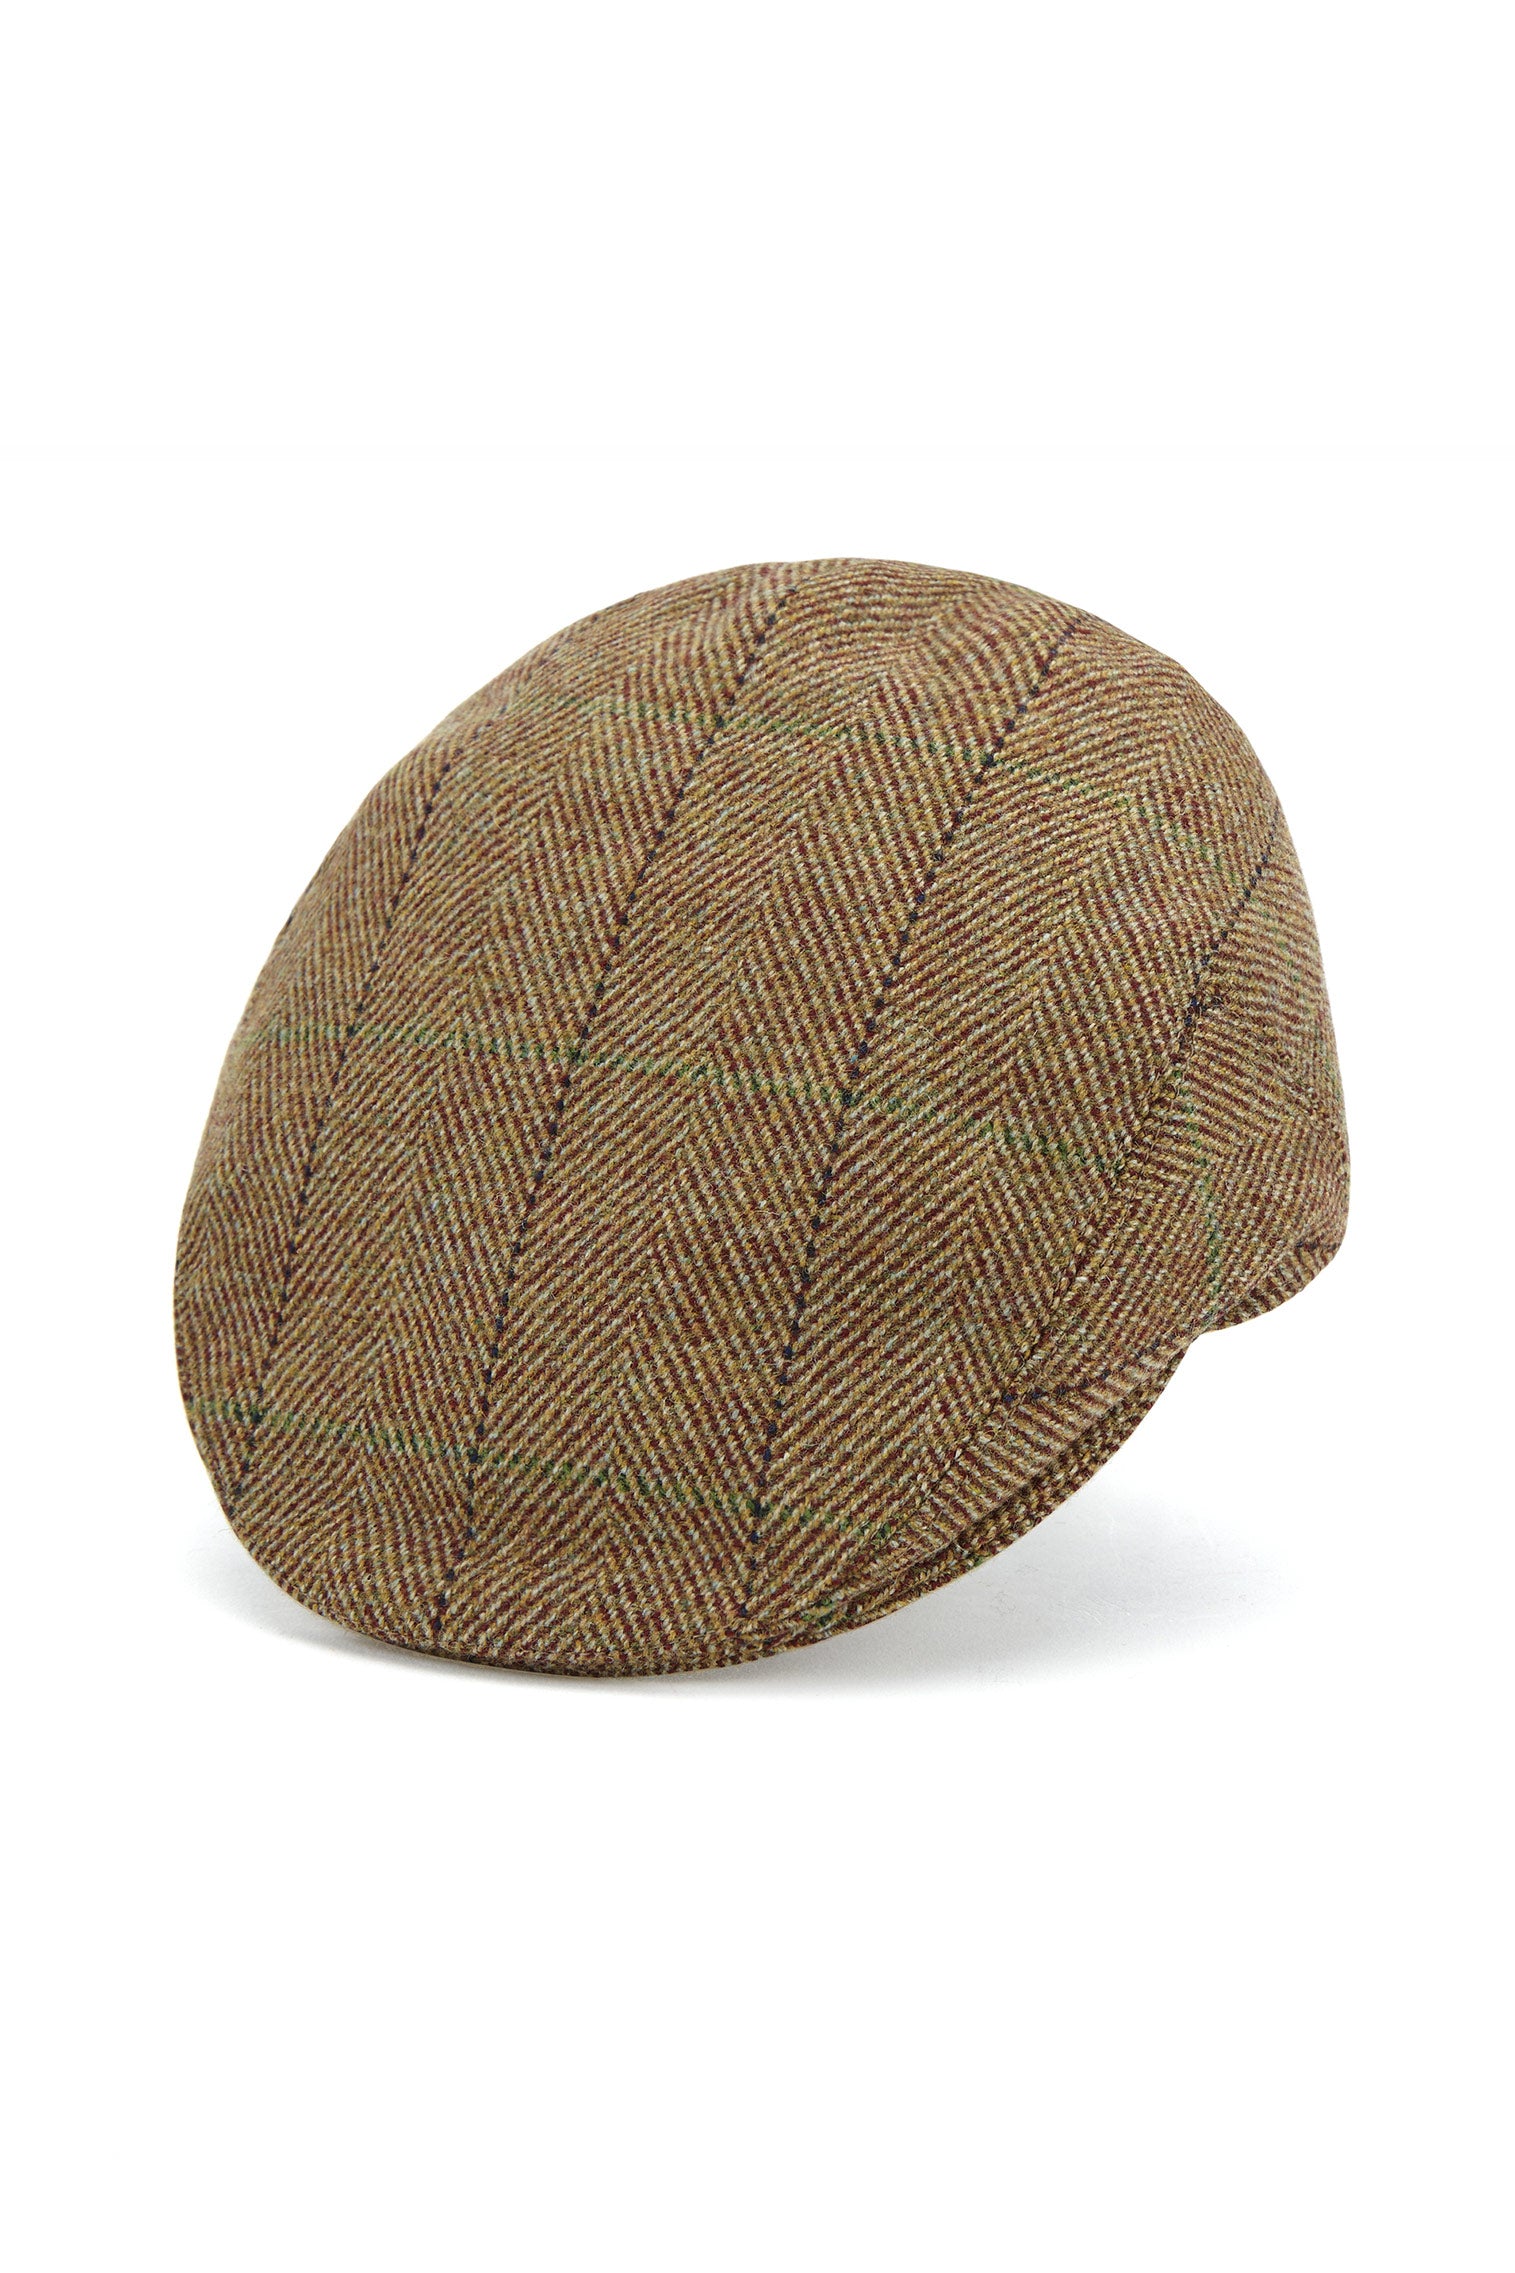 Gill Tweed Flat Cap - Hats for Slimmer Frames - Lock & Co. Hatters London UK